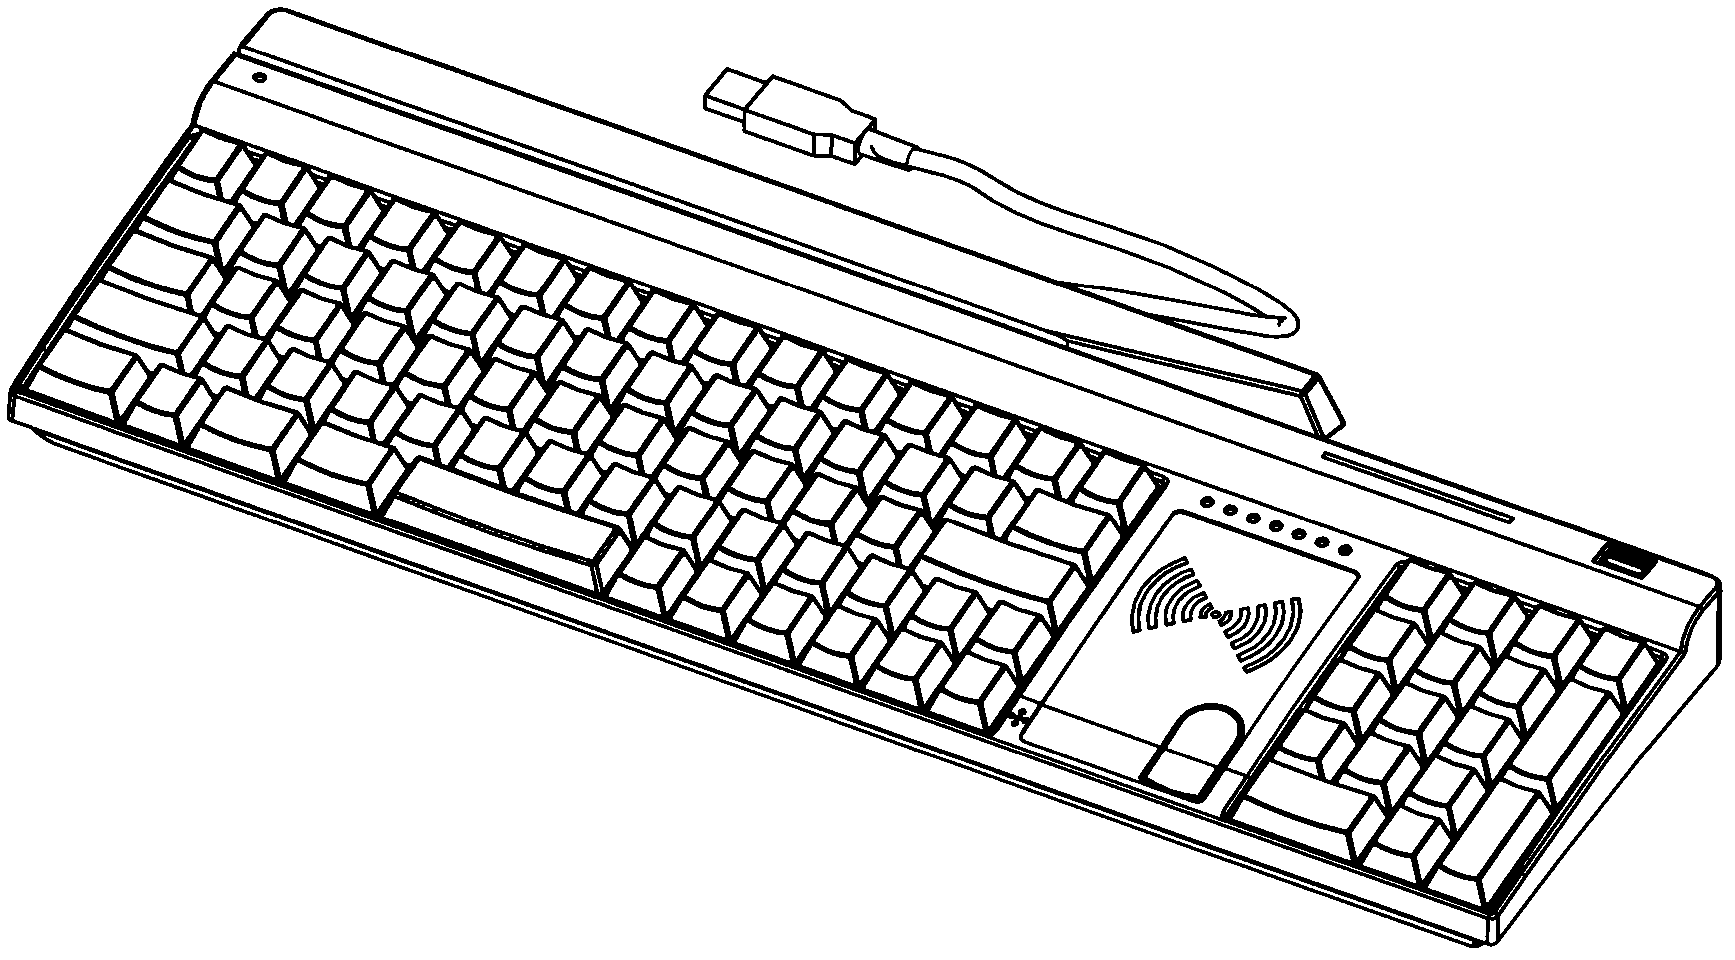 Modular combined keyboard